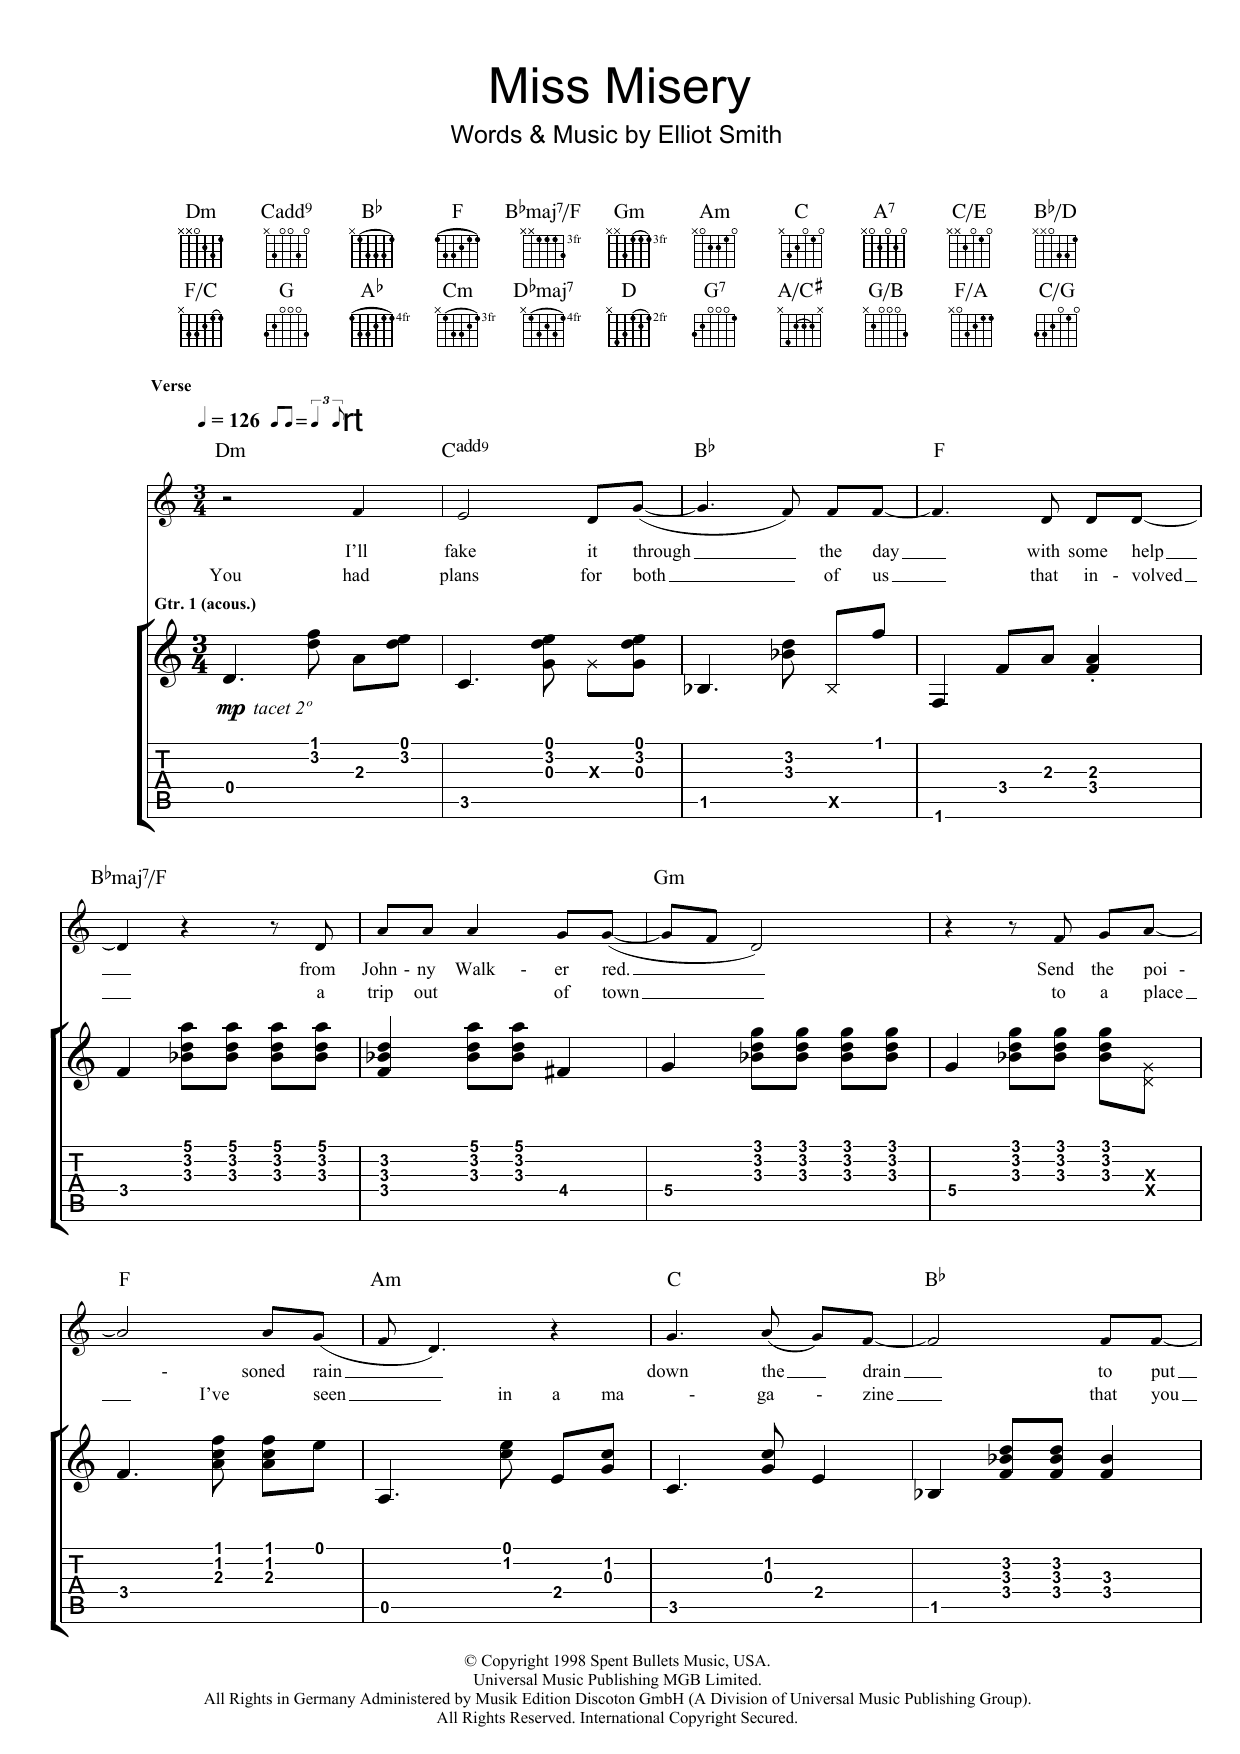 Elliott Smith Miss Misery Sheet Music Notes & Chords for Ukulele - Download or Print PDF